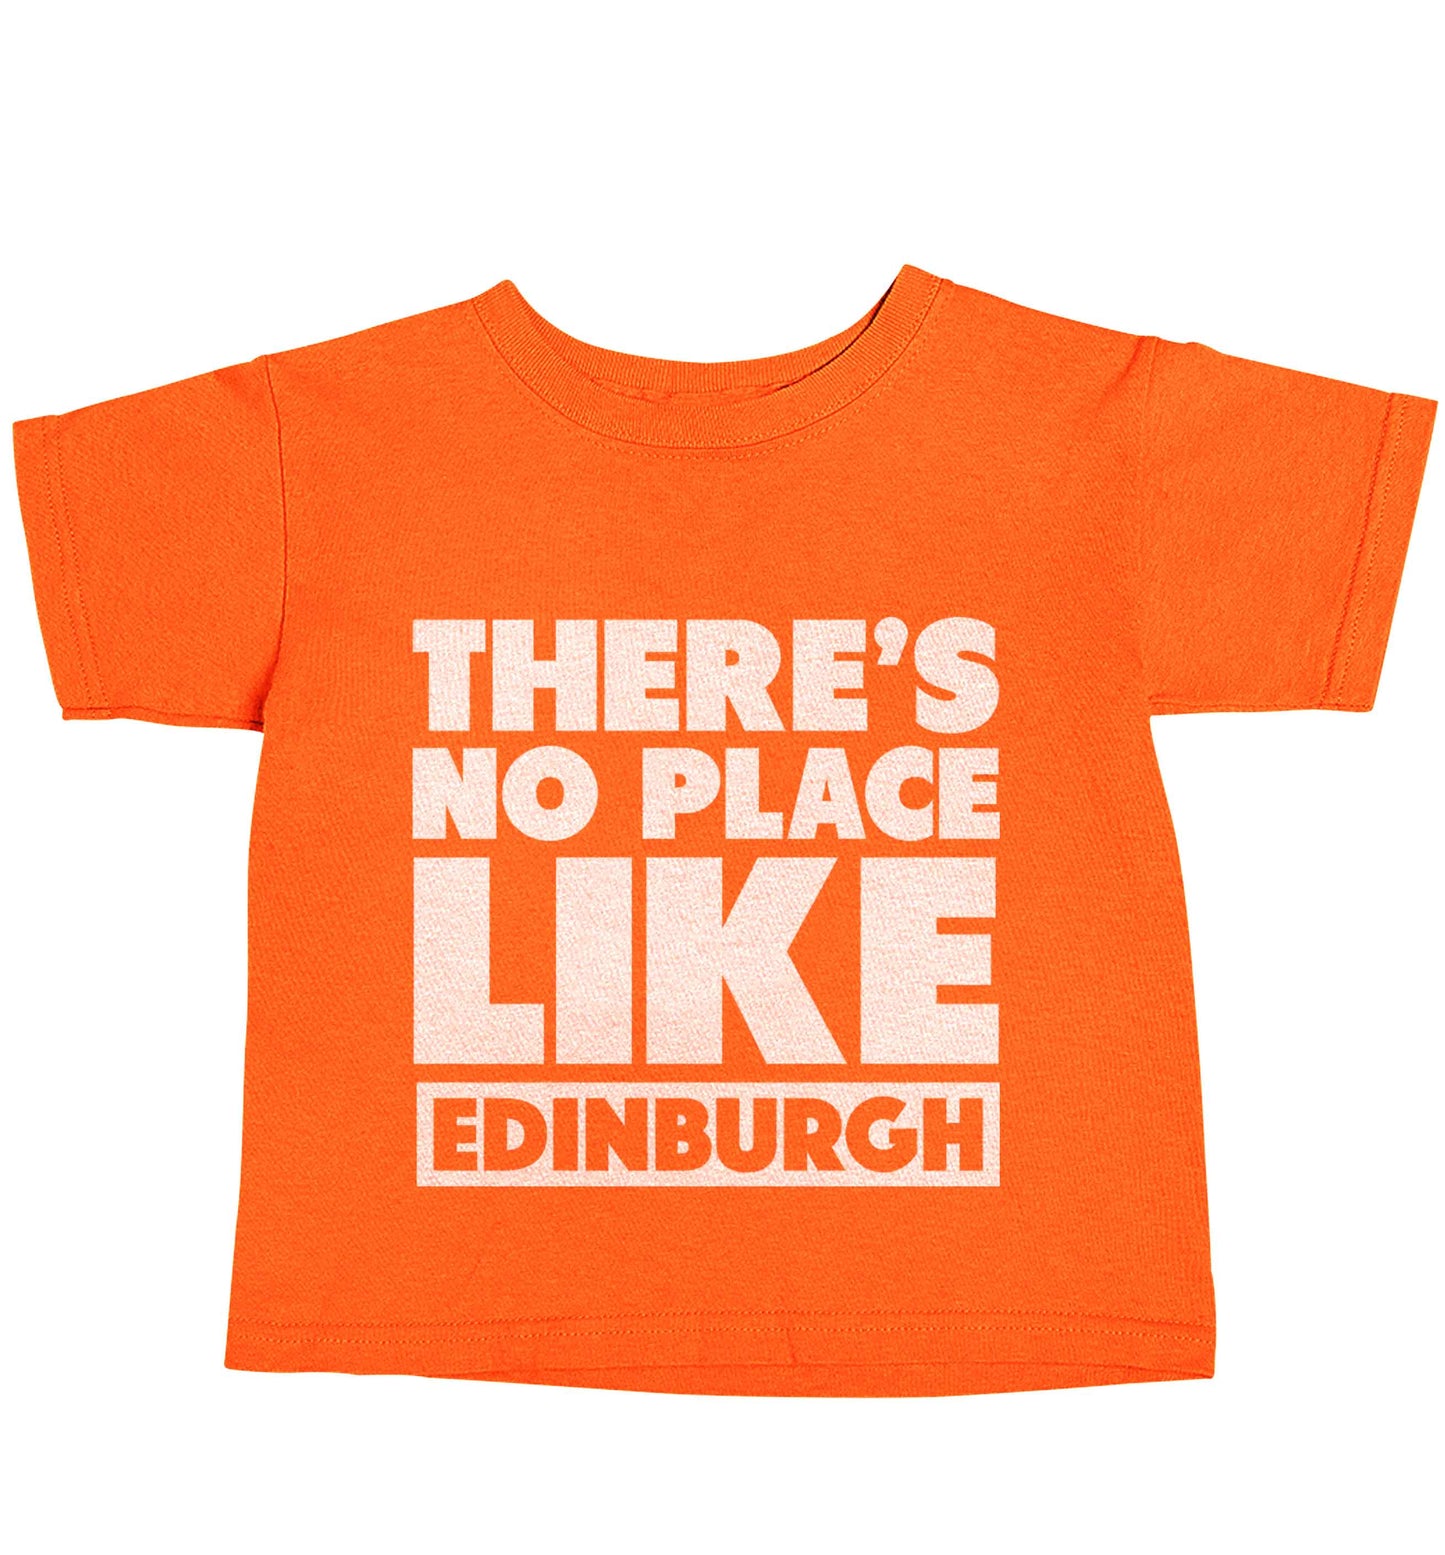 There's no place like Edinburgh orange baby toddler Tshirt 2 Years